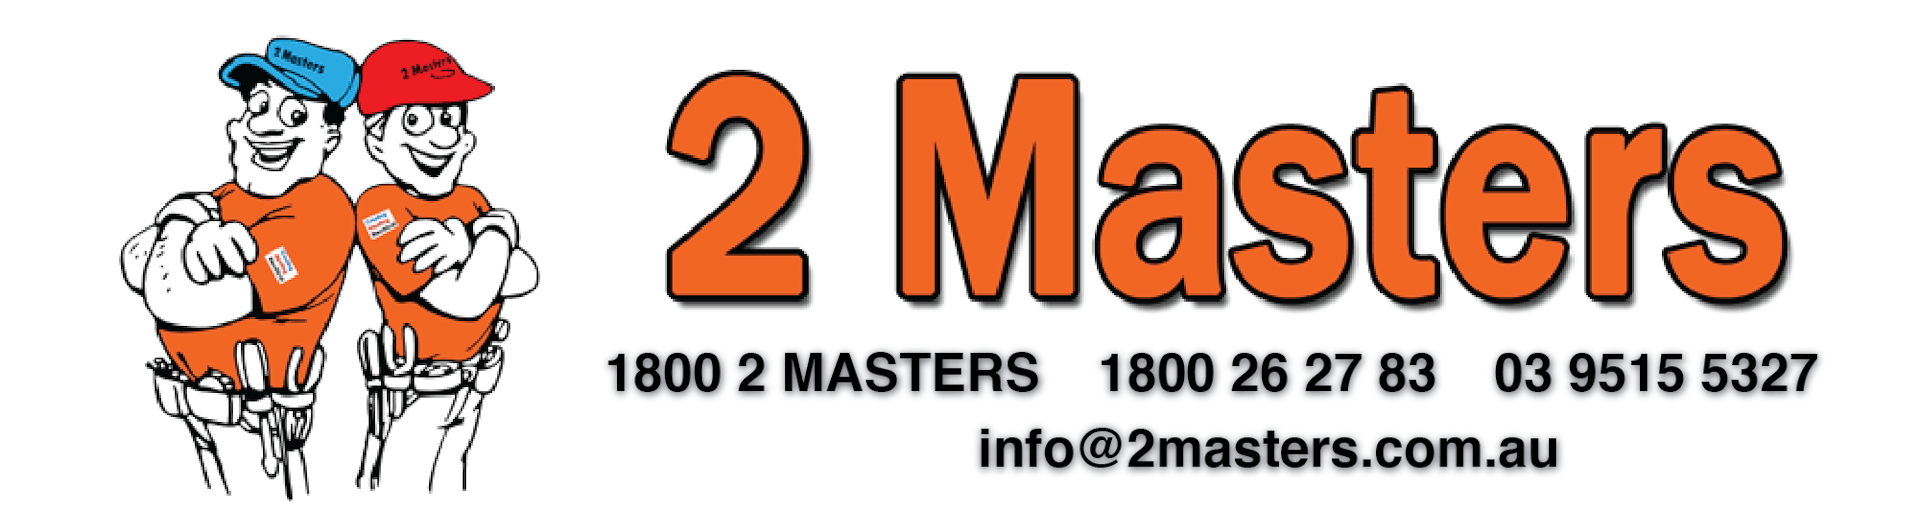 2 Masters, phone: 0395155327, email: info@2masters.com.au